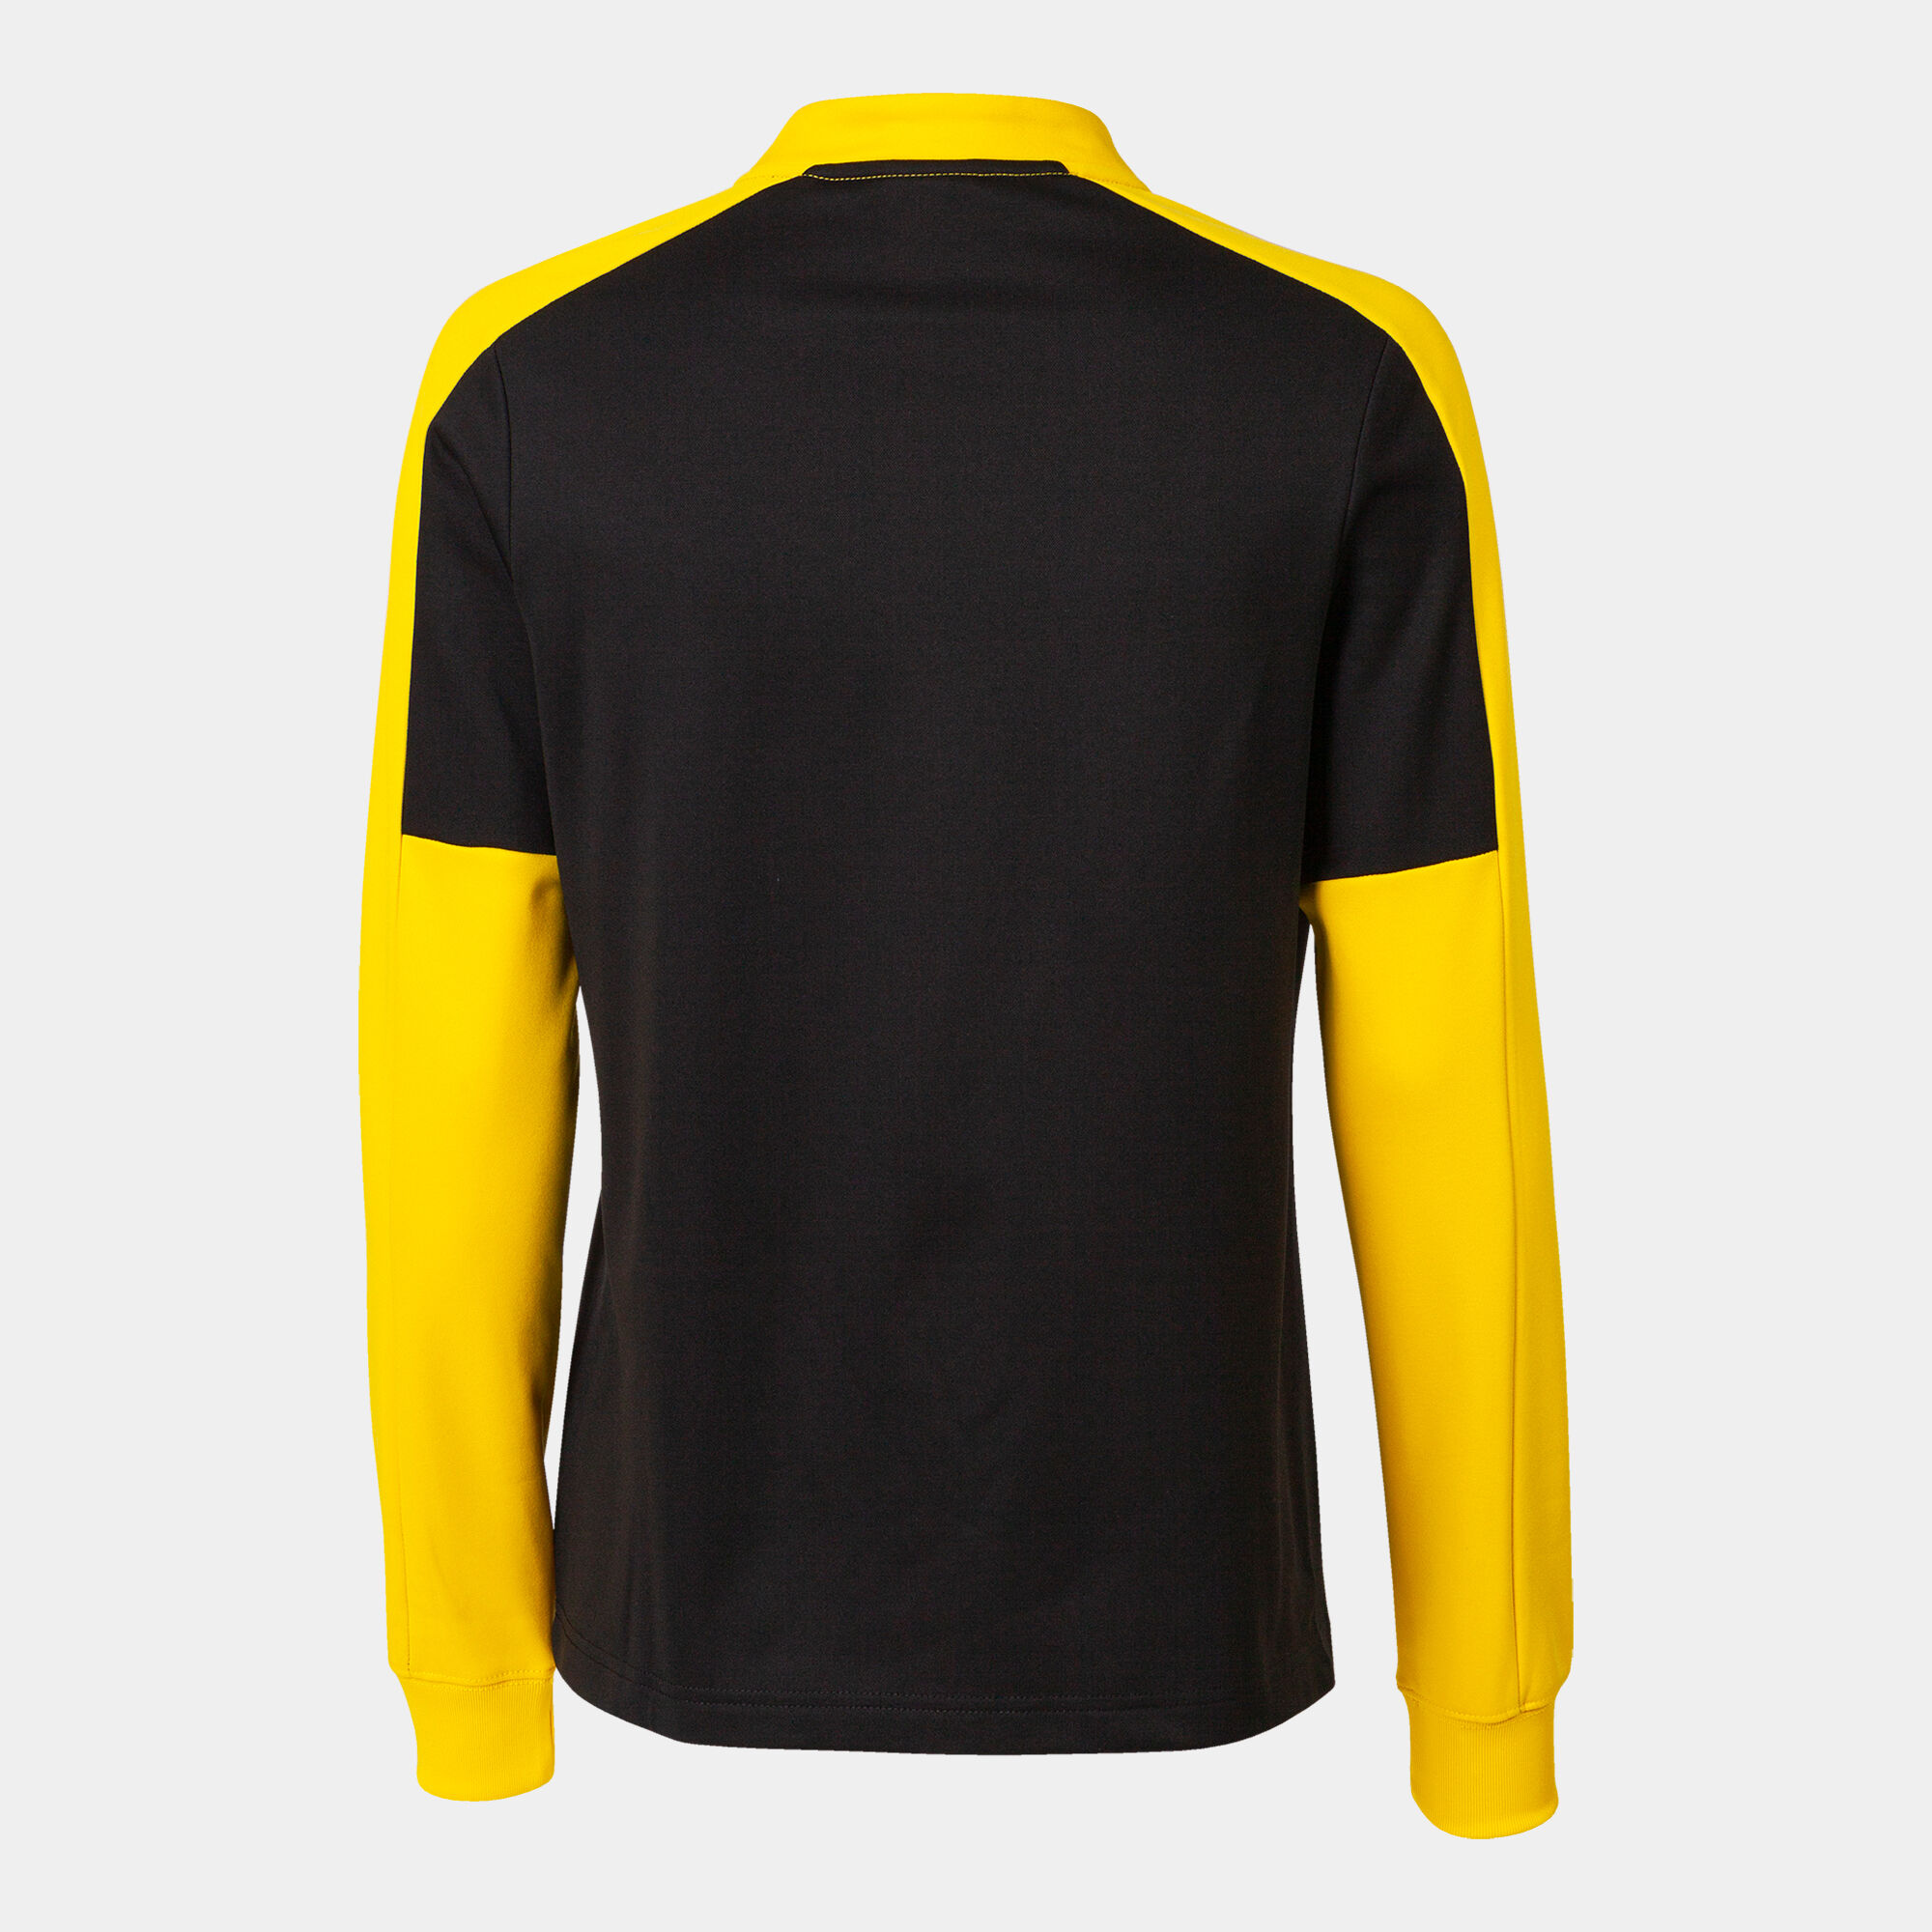 Sweat-shirt femme Eco Championship noir jaune